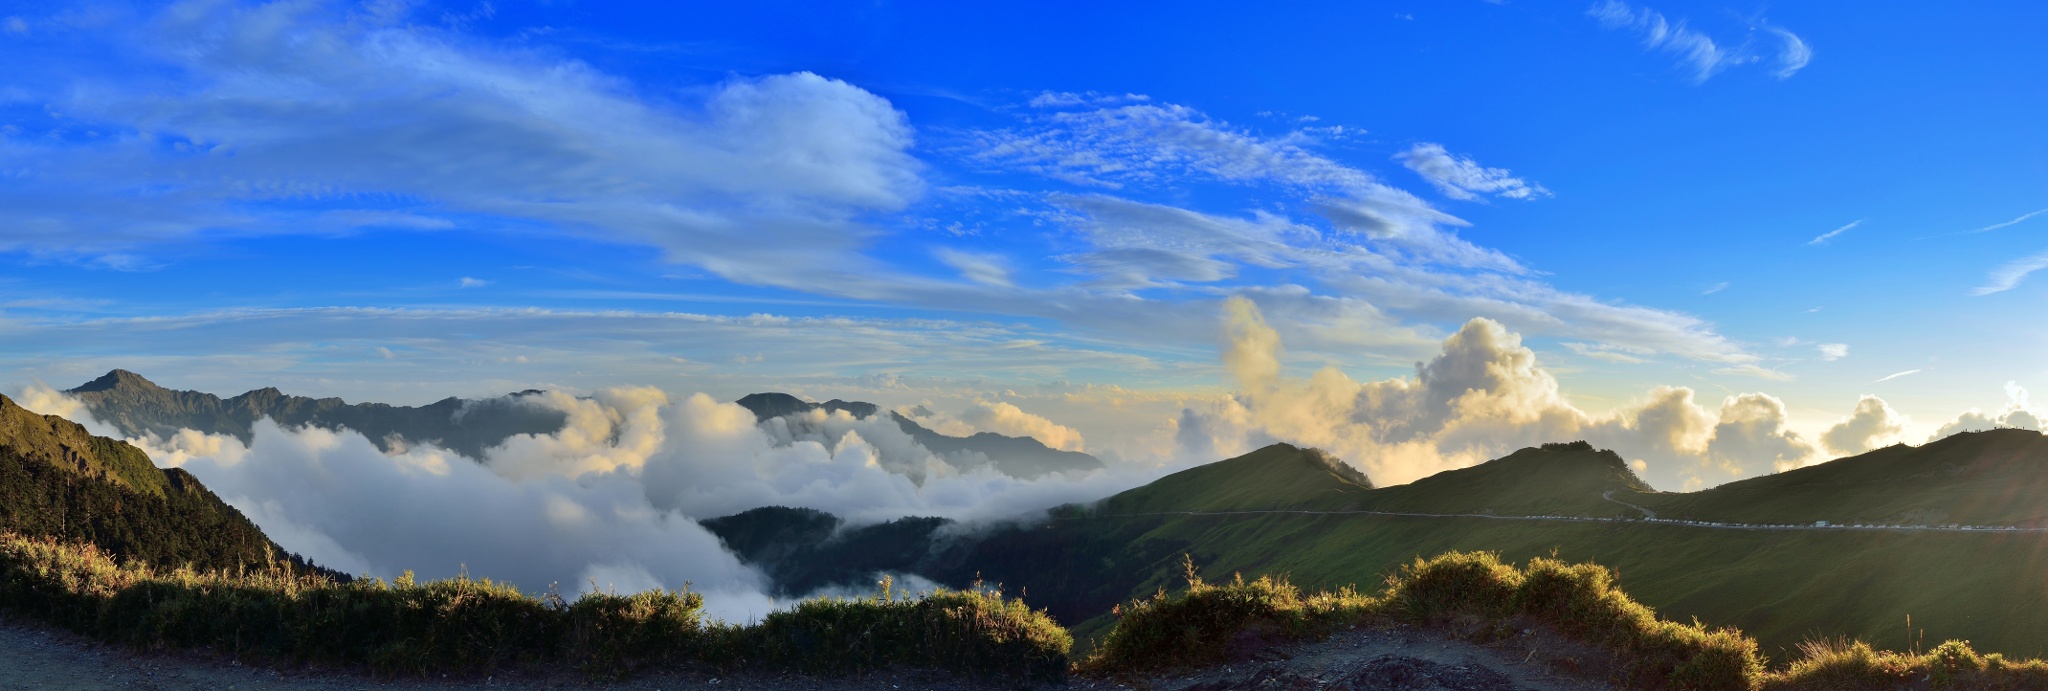 Mt. He Huan Panorama